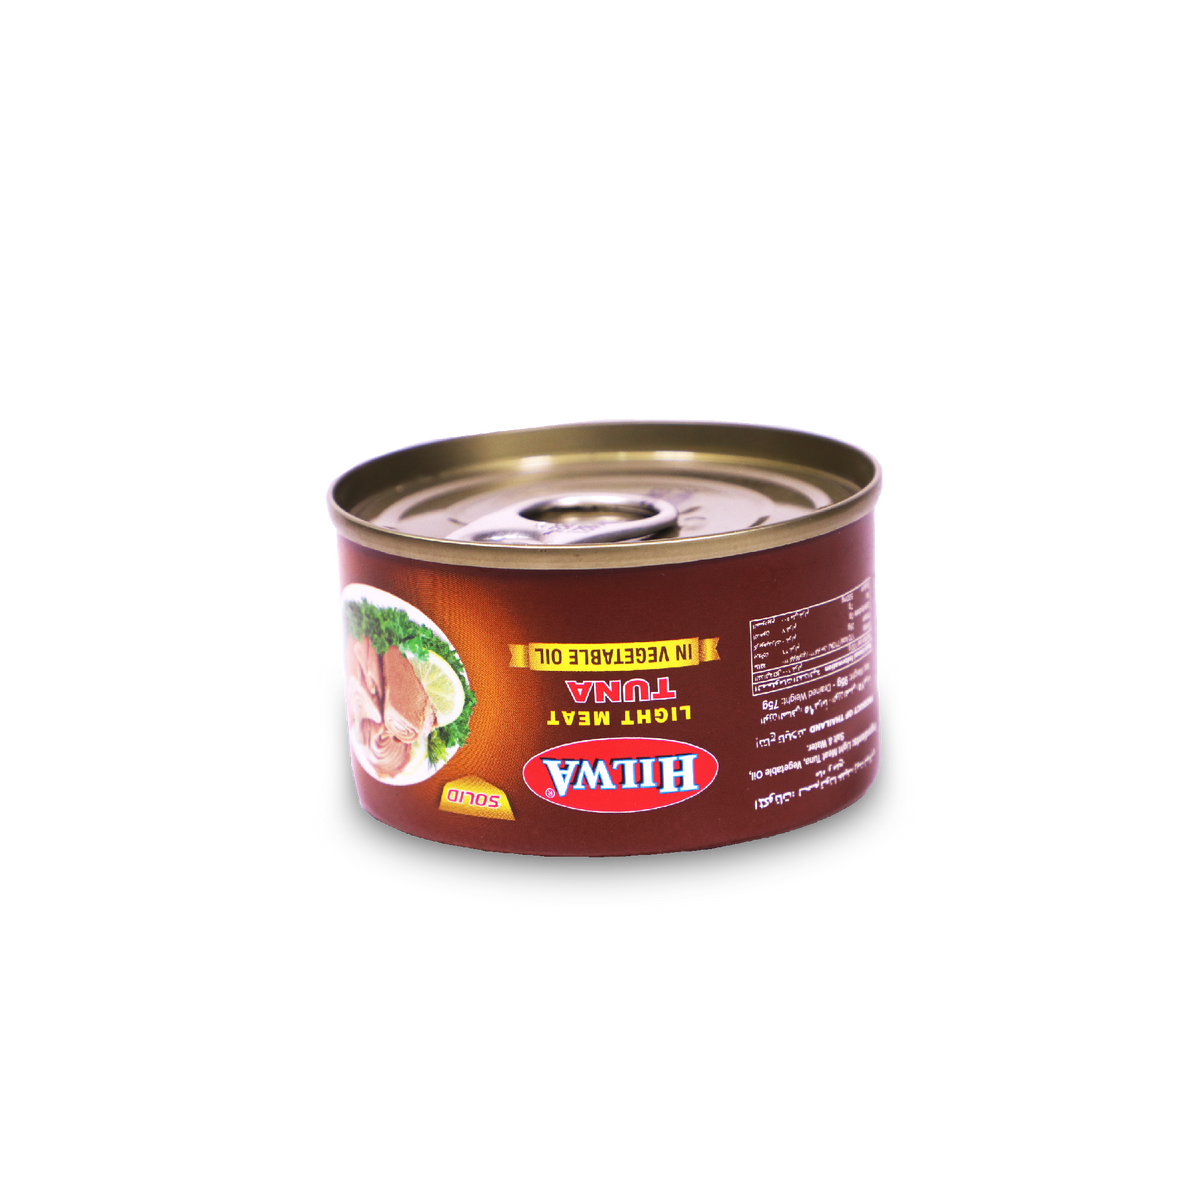 Hilwa Light Meat Tuna With Vegtable Oil 95G